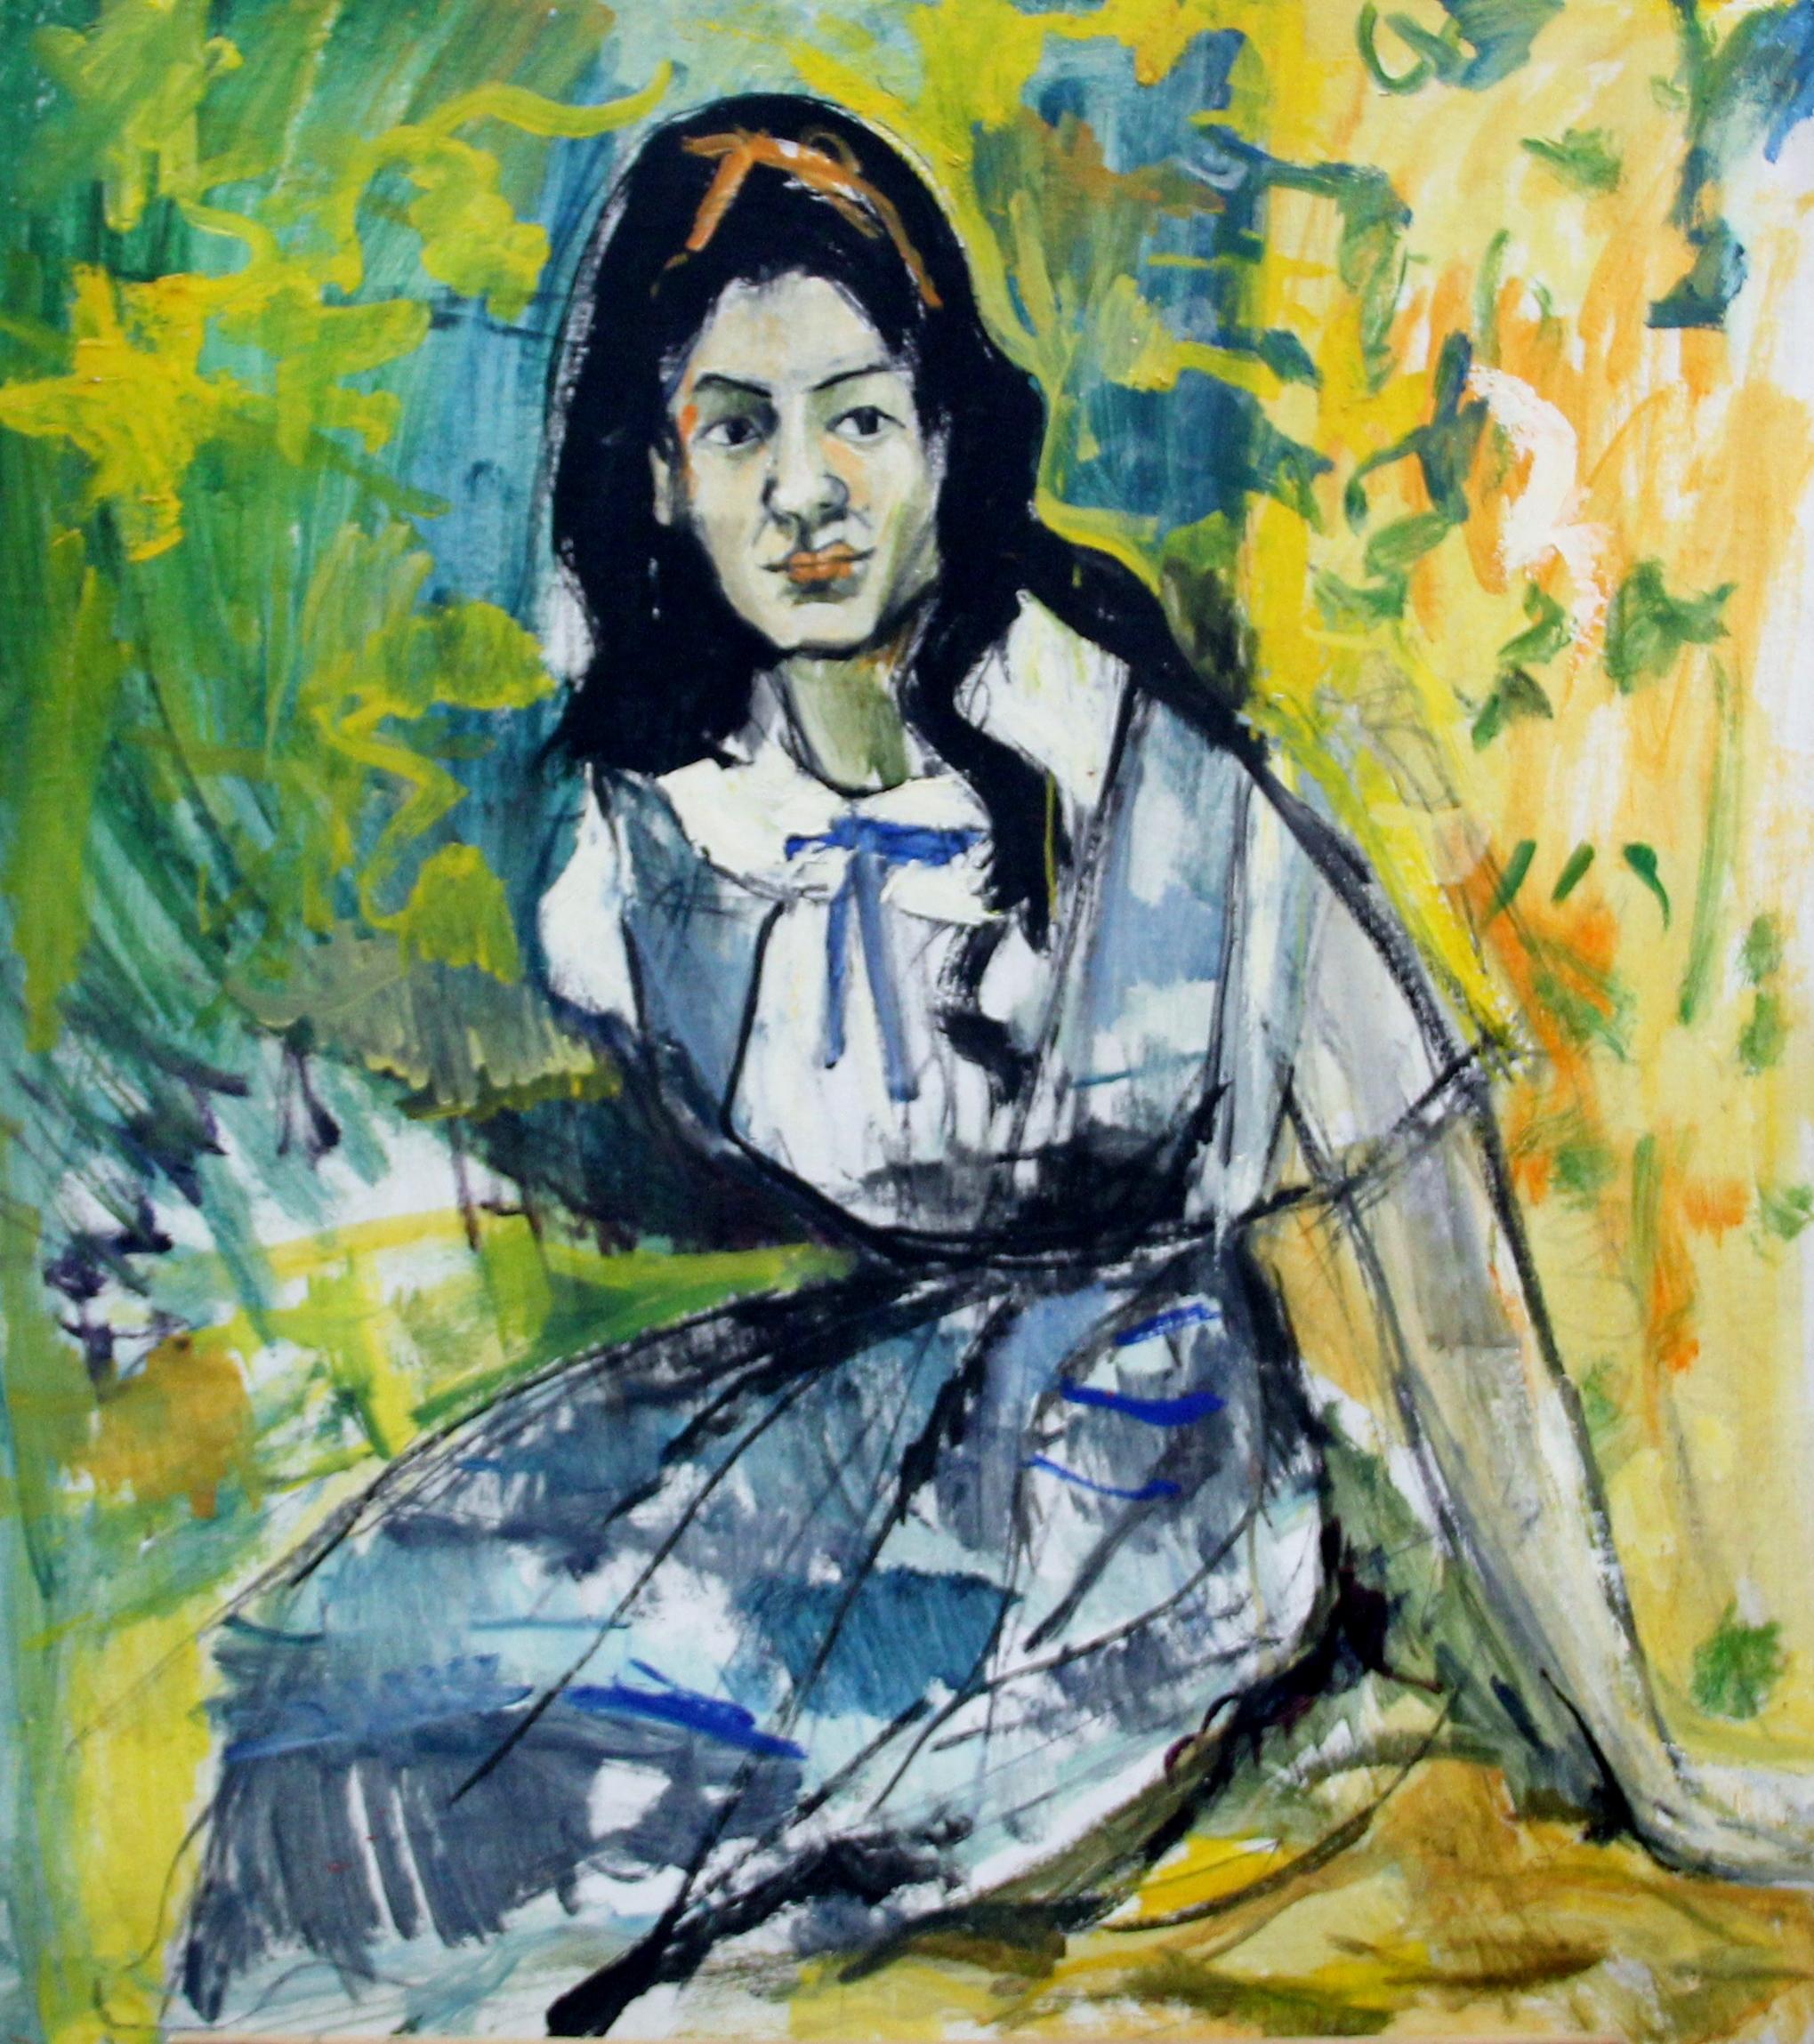 Bernard Harmon Portrait Painting - Girl with Ribbon in Hair, Expressionist Portrait by Philadelphia Artist